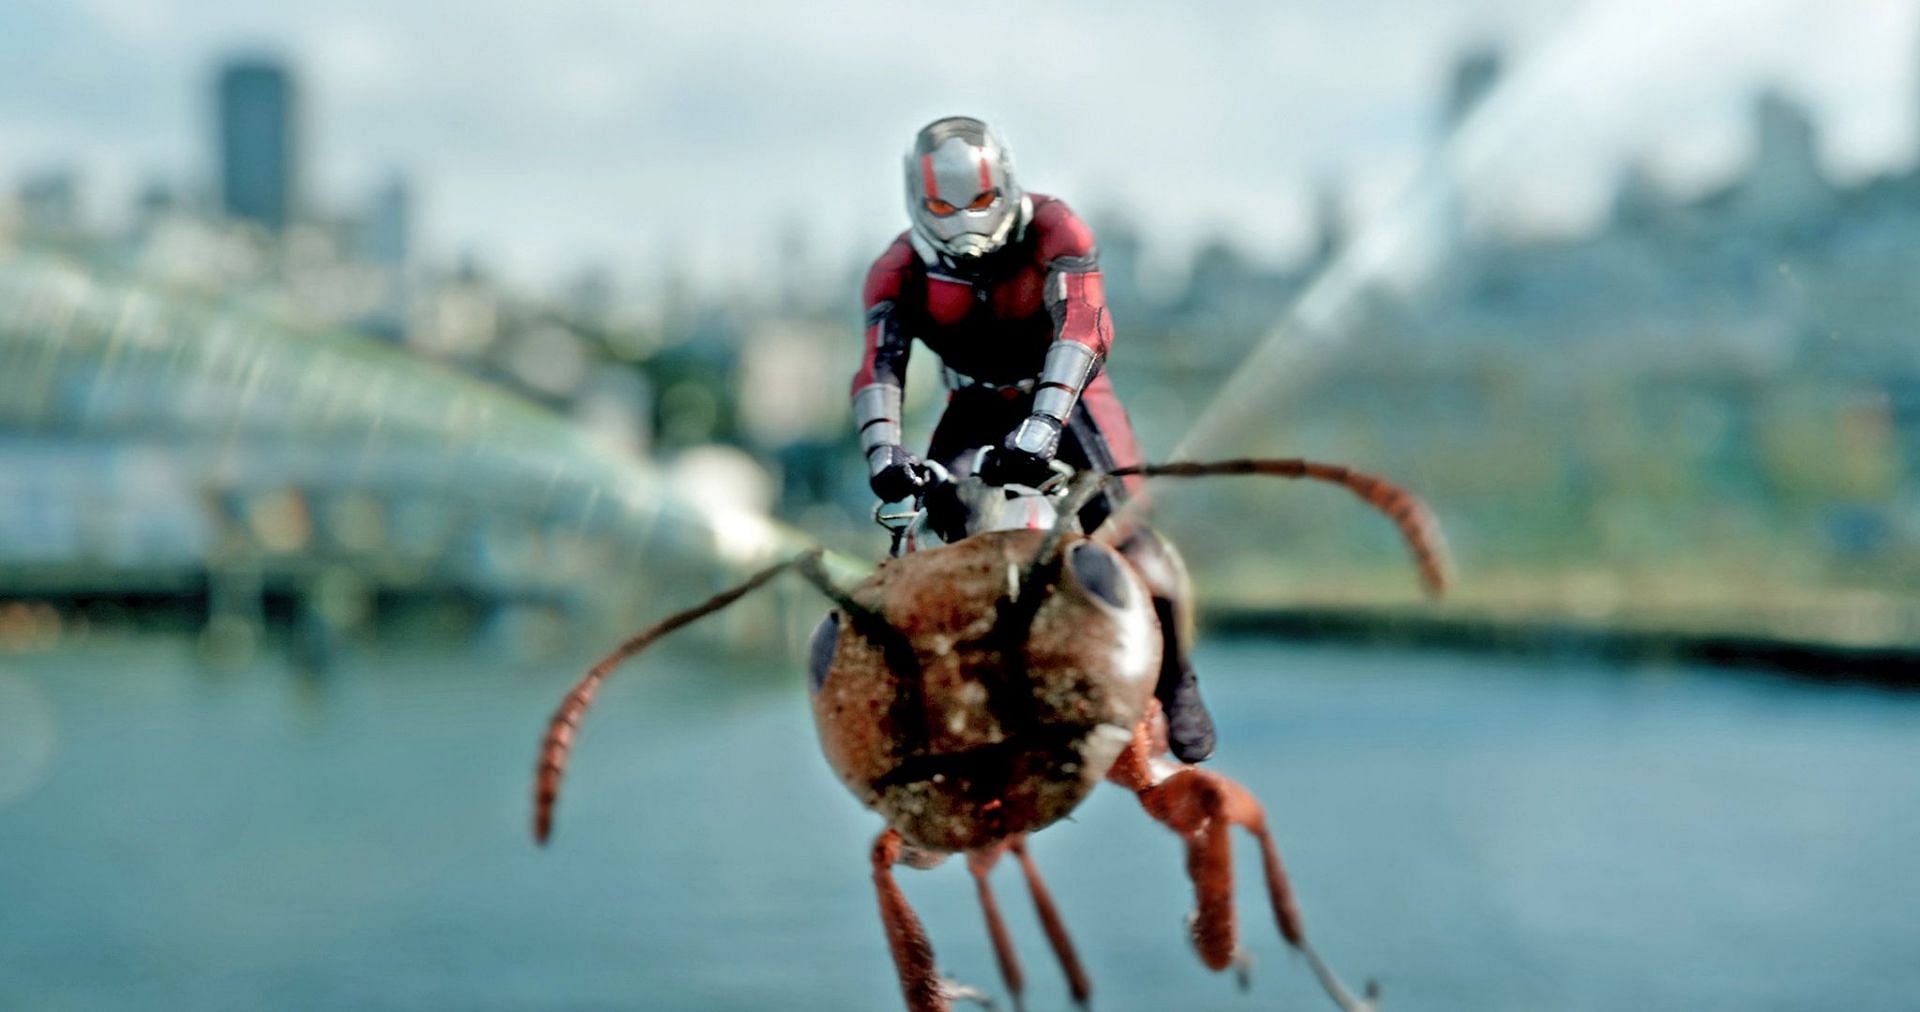 Ant-Man: Bringing Laughter to the Intense Marvel Cinematic Universe (Image via Marvel Studios)